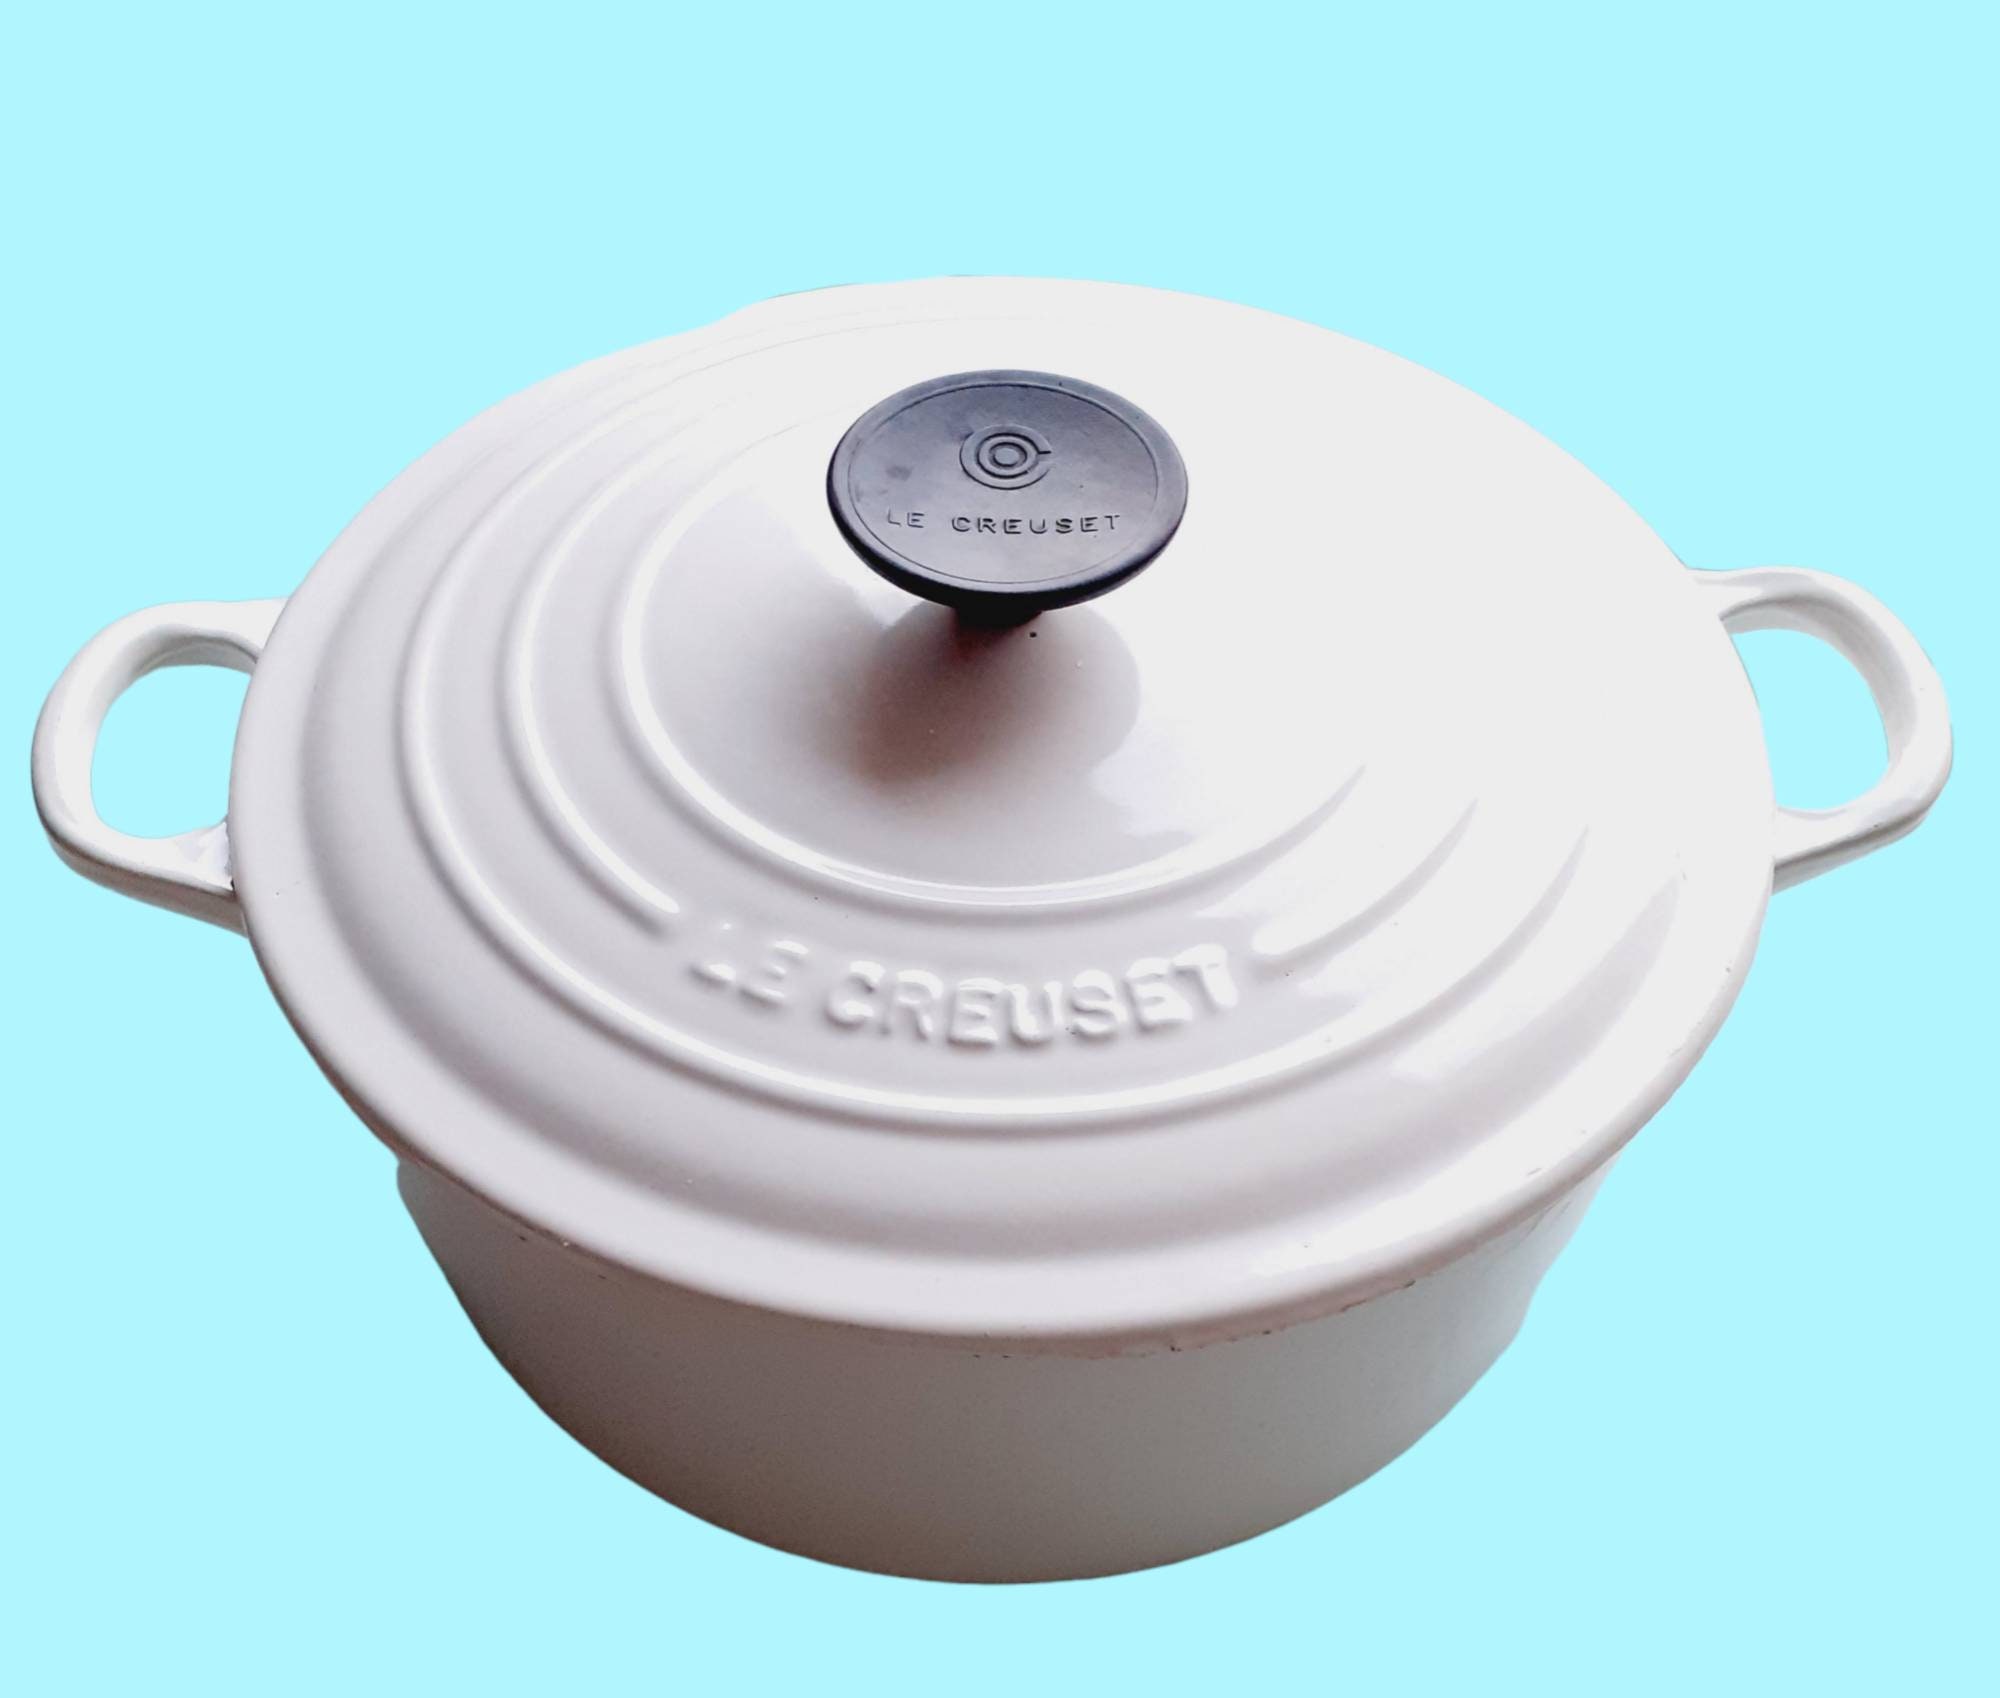 Le Creuset light blue enamel cast iron #18 Sauce pan Made in